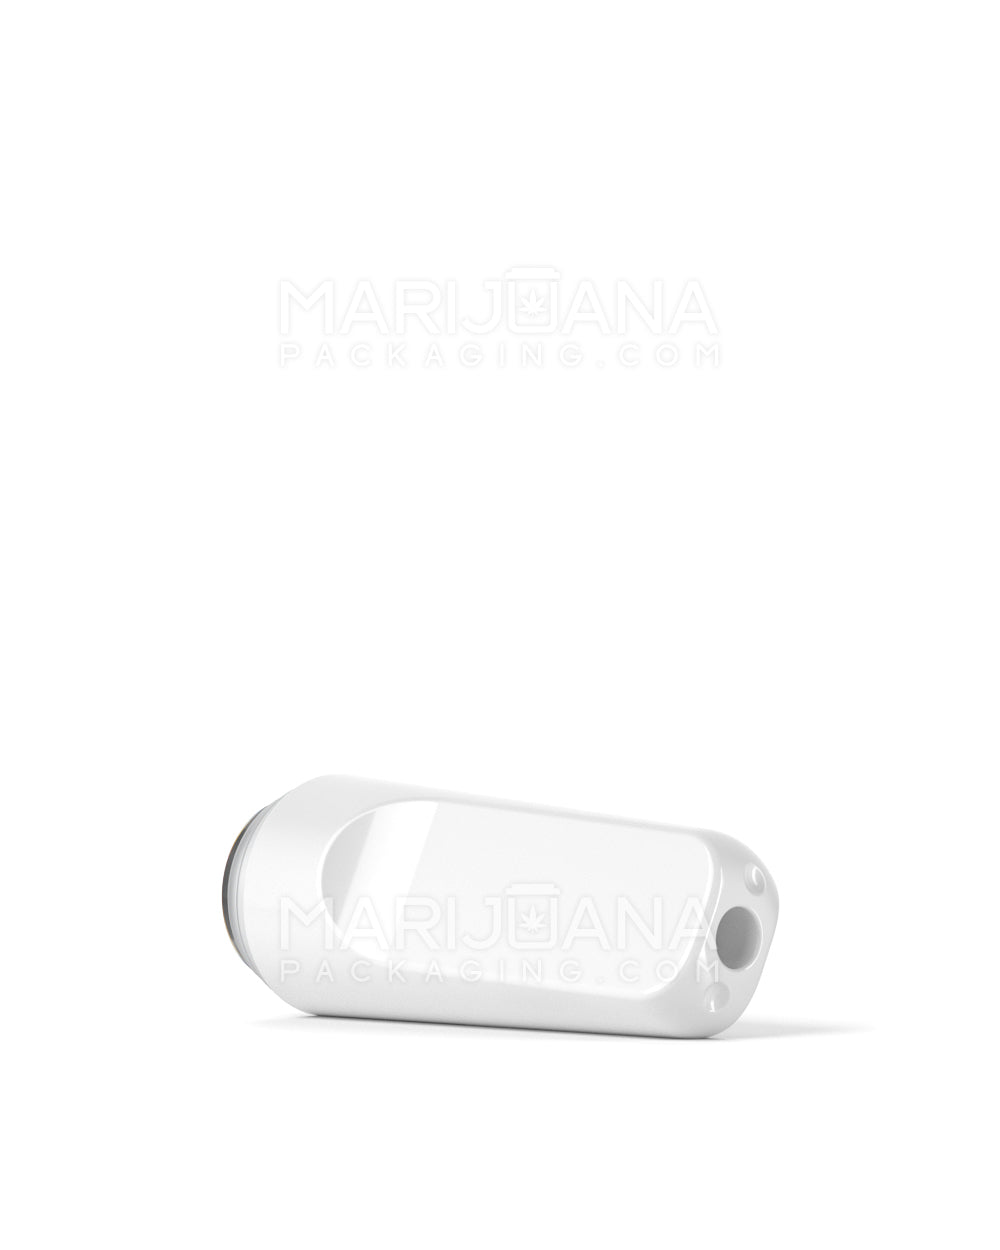 RAE | Flat Vape Mouthpiece for Hand Press Plastic Cartridges | White Plastic - Hand Press - 400 Count - 5